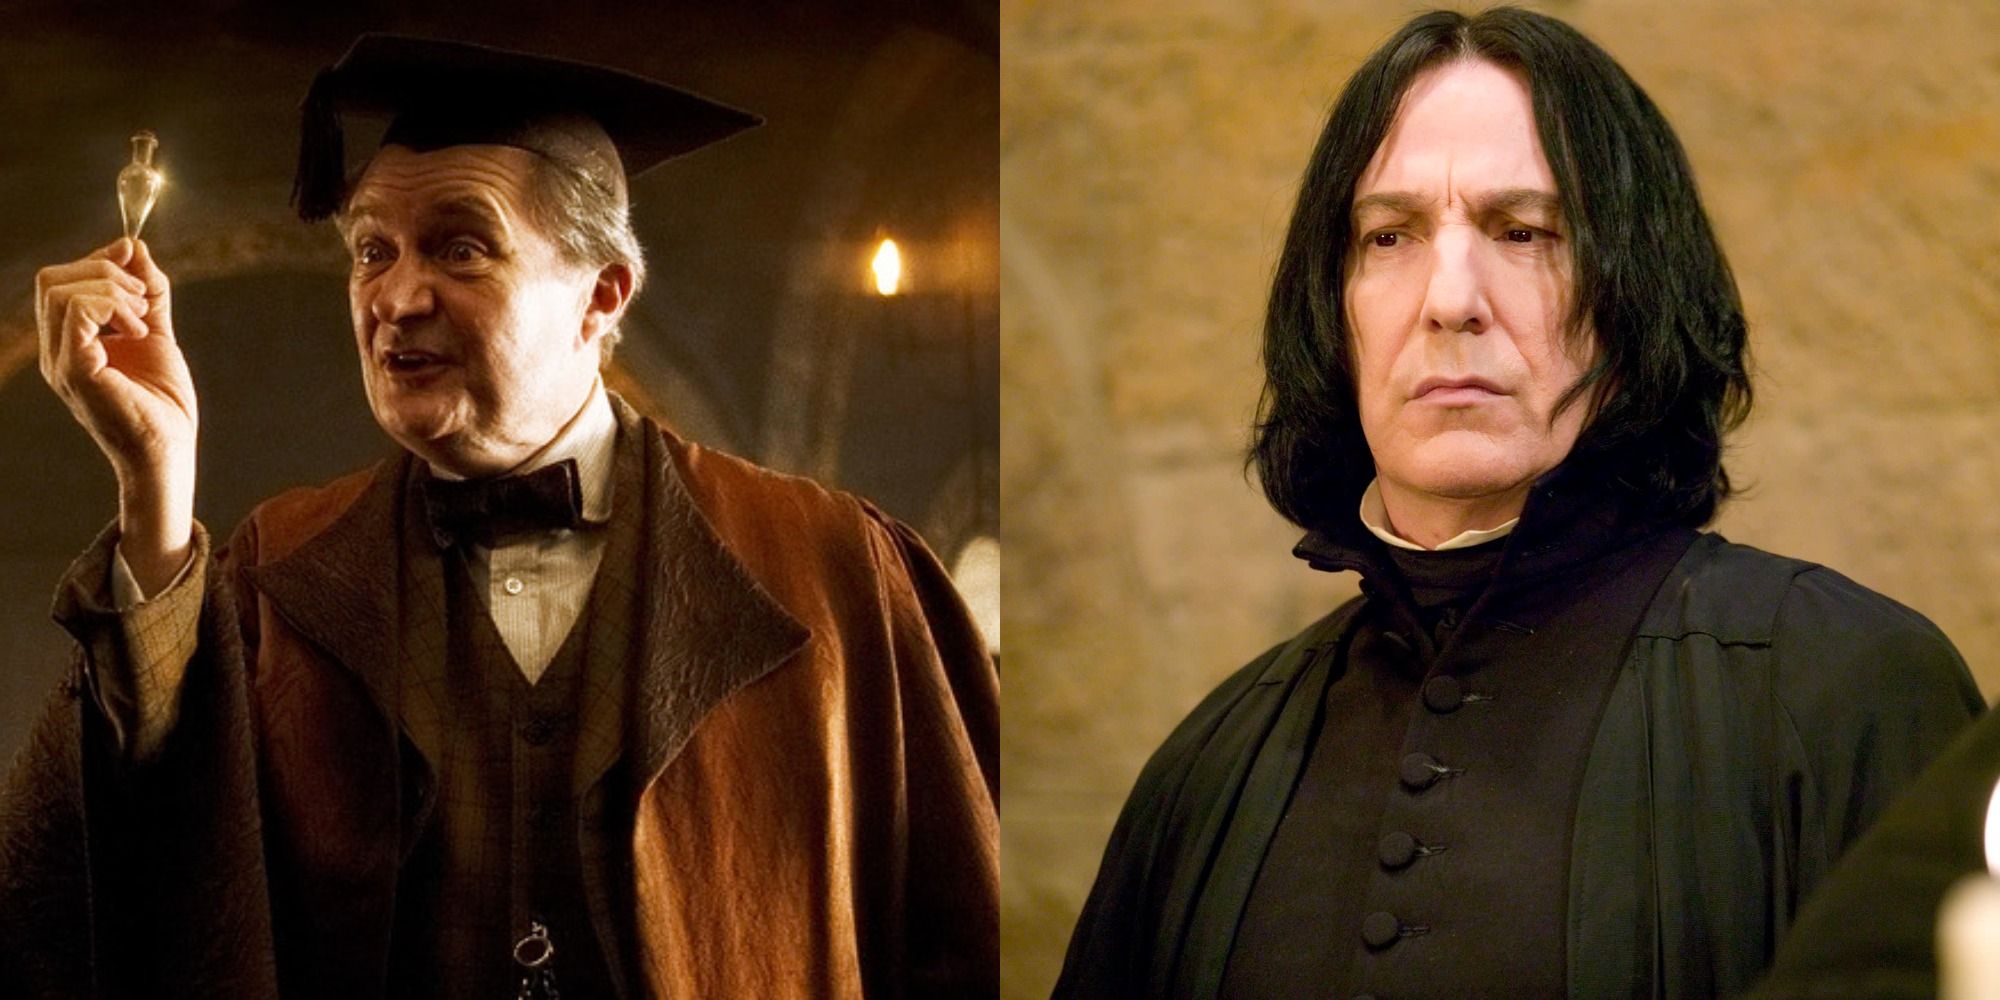 Split image showing Slughorn and Snape in Harry Potter.